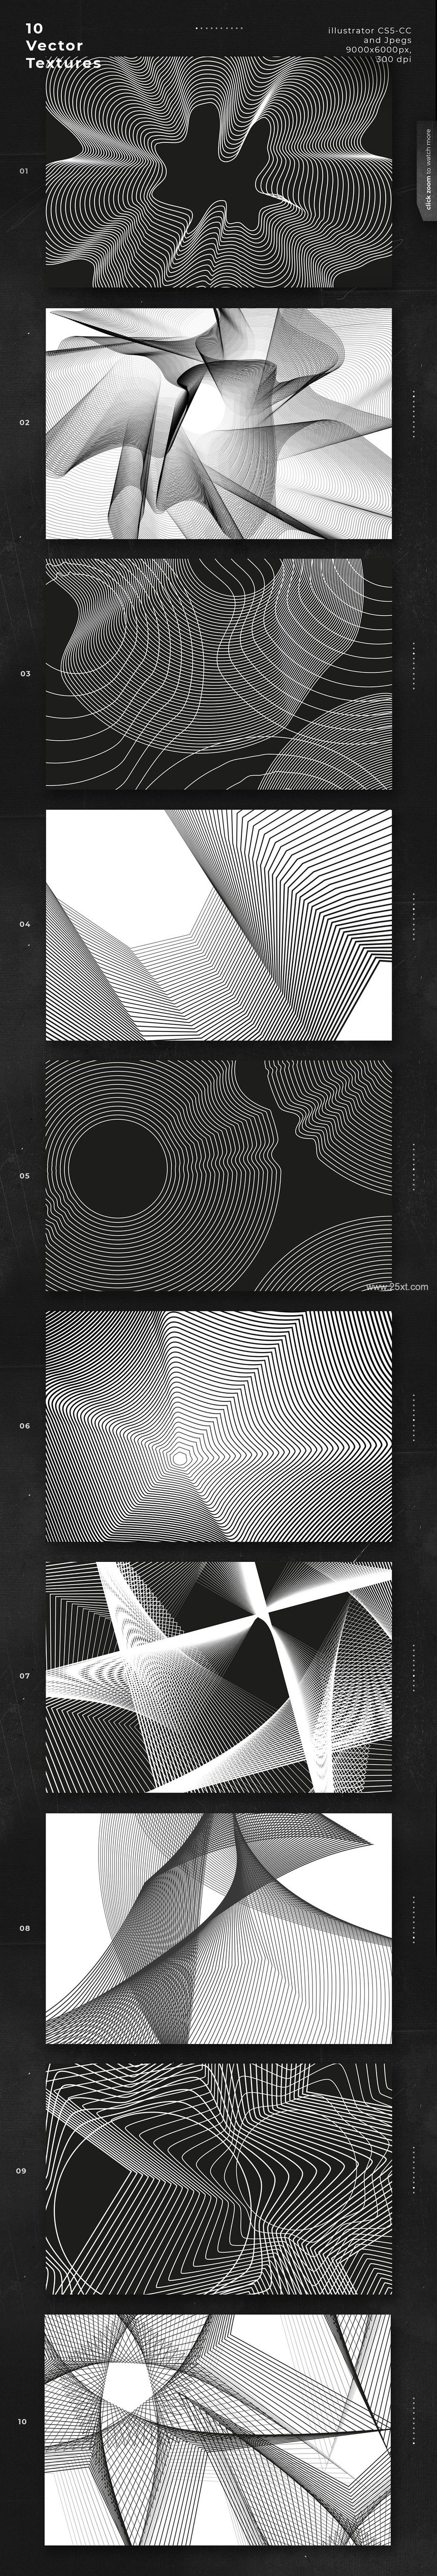 25xt-487678-Shapes Backgrounds Textures9.jpg